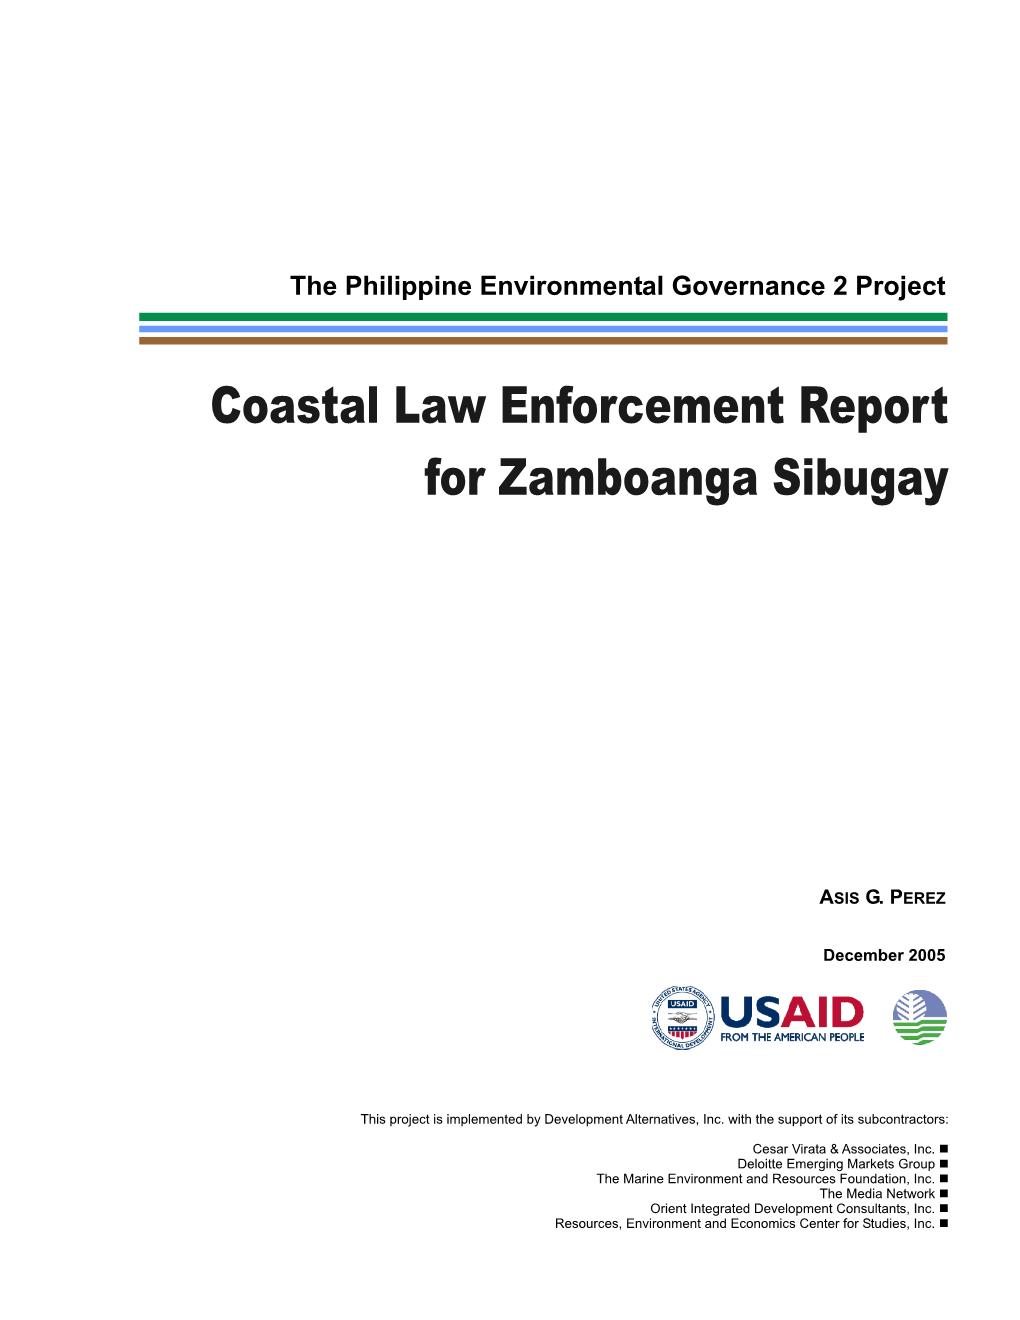 Coastal Law Enforcement Report for Zamboanga Sibugay